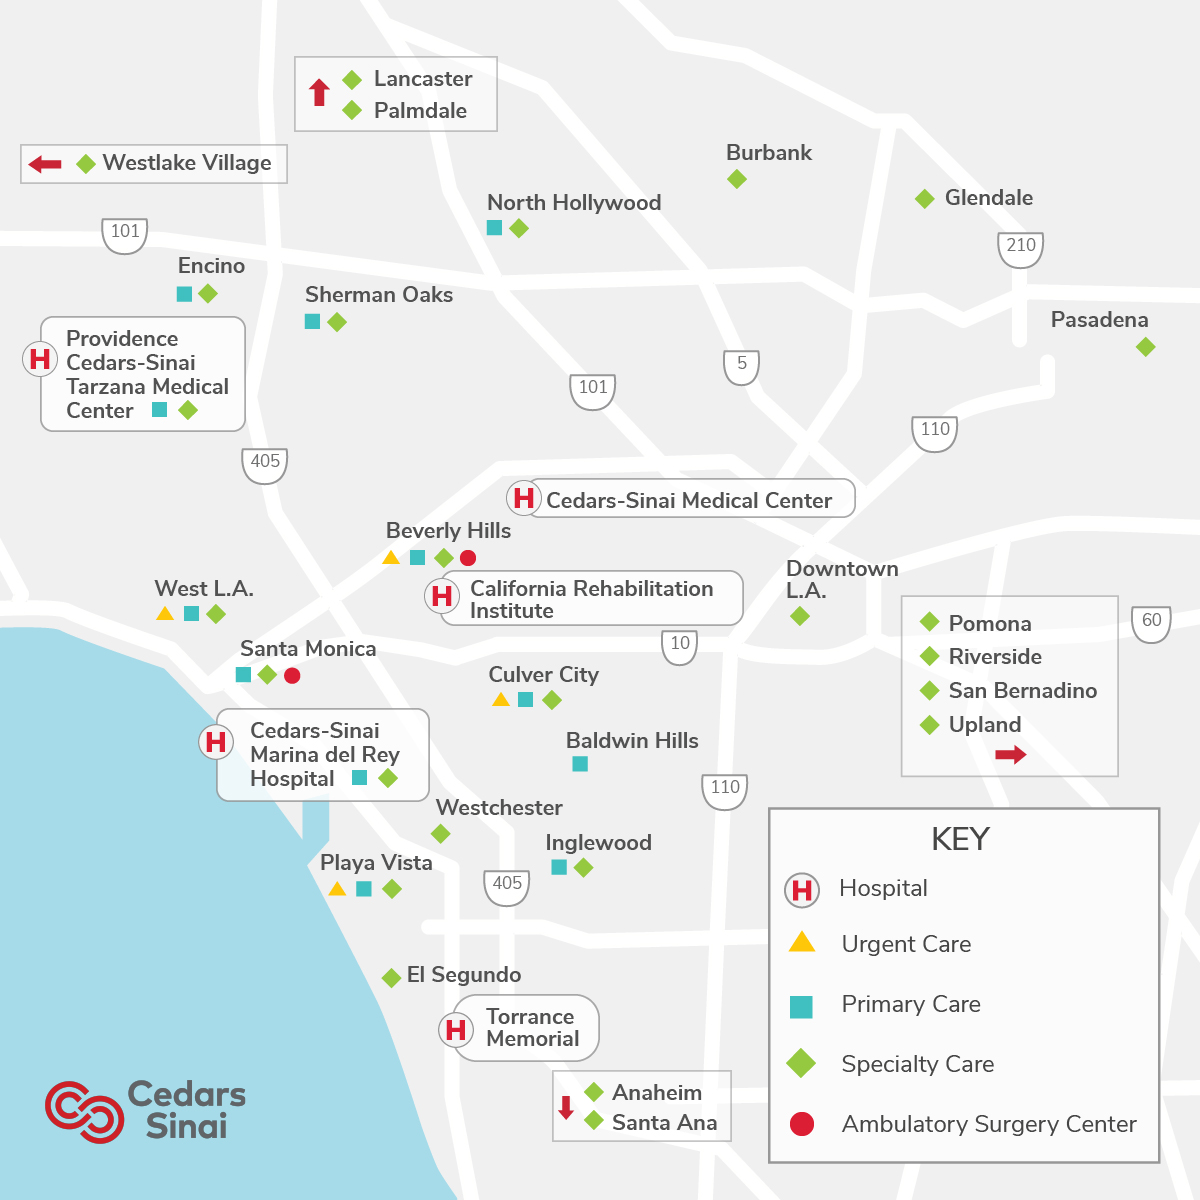 Cedars-Sinai has over 250 locations across Southern California